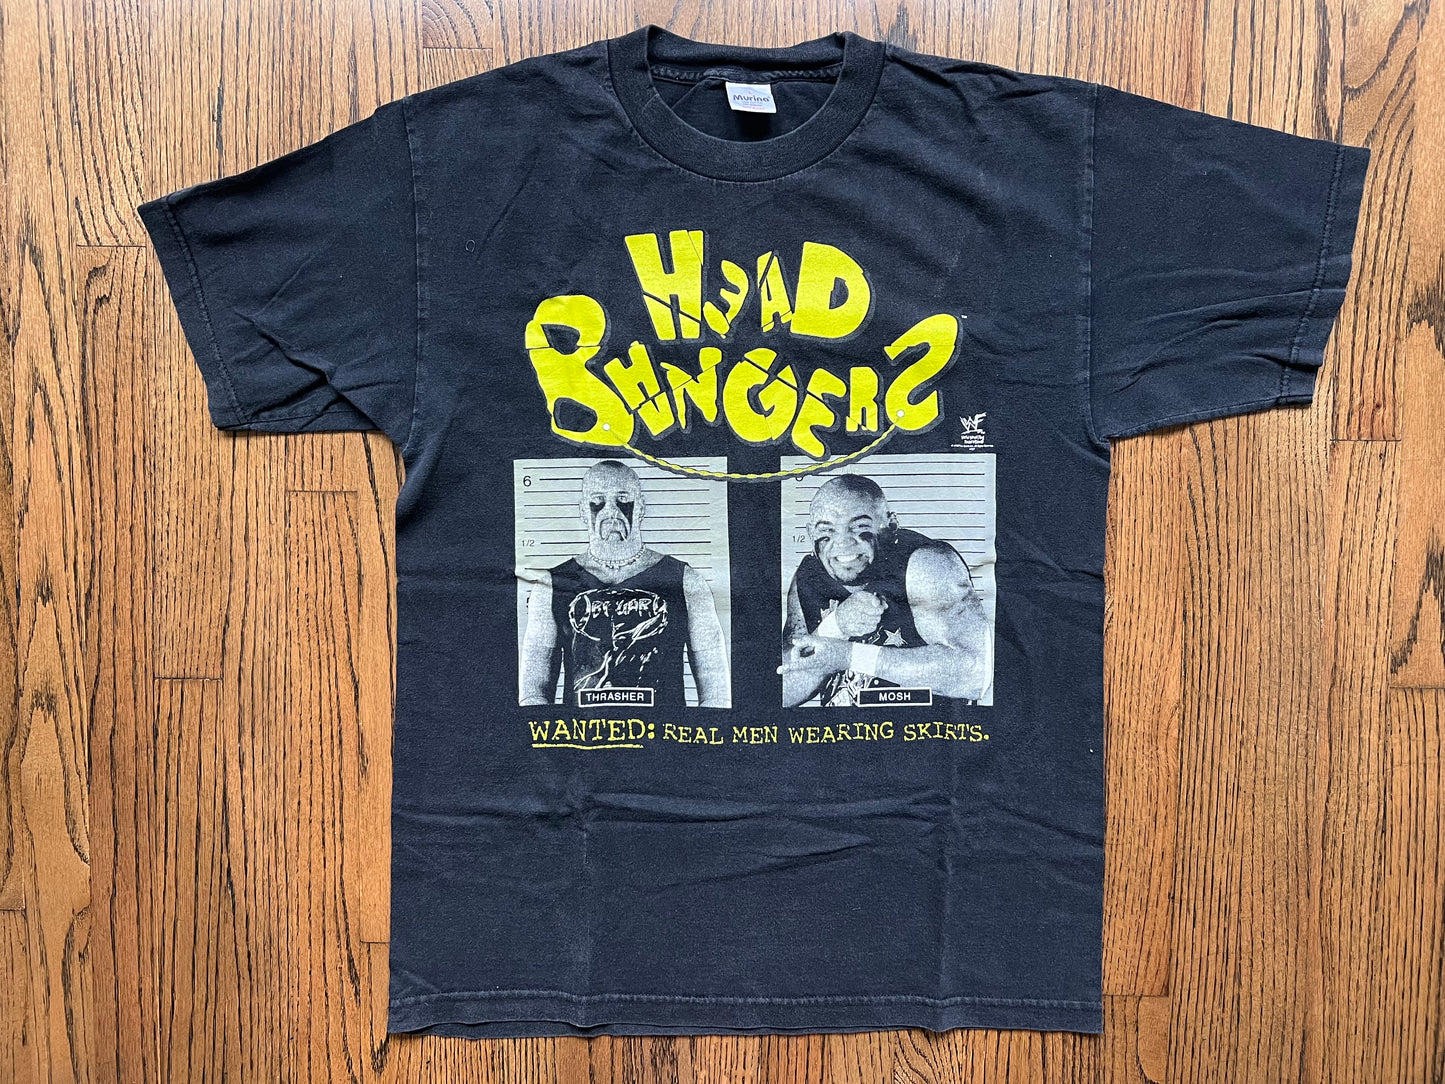 1997 WWF Headbangers “Get Banged” shirt featuring Mosh and Thrasher